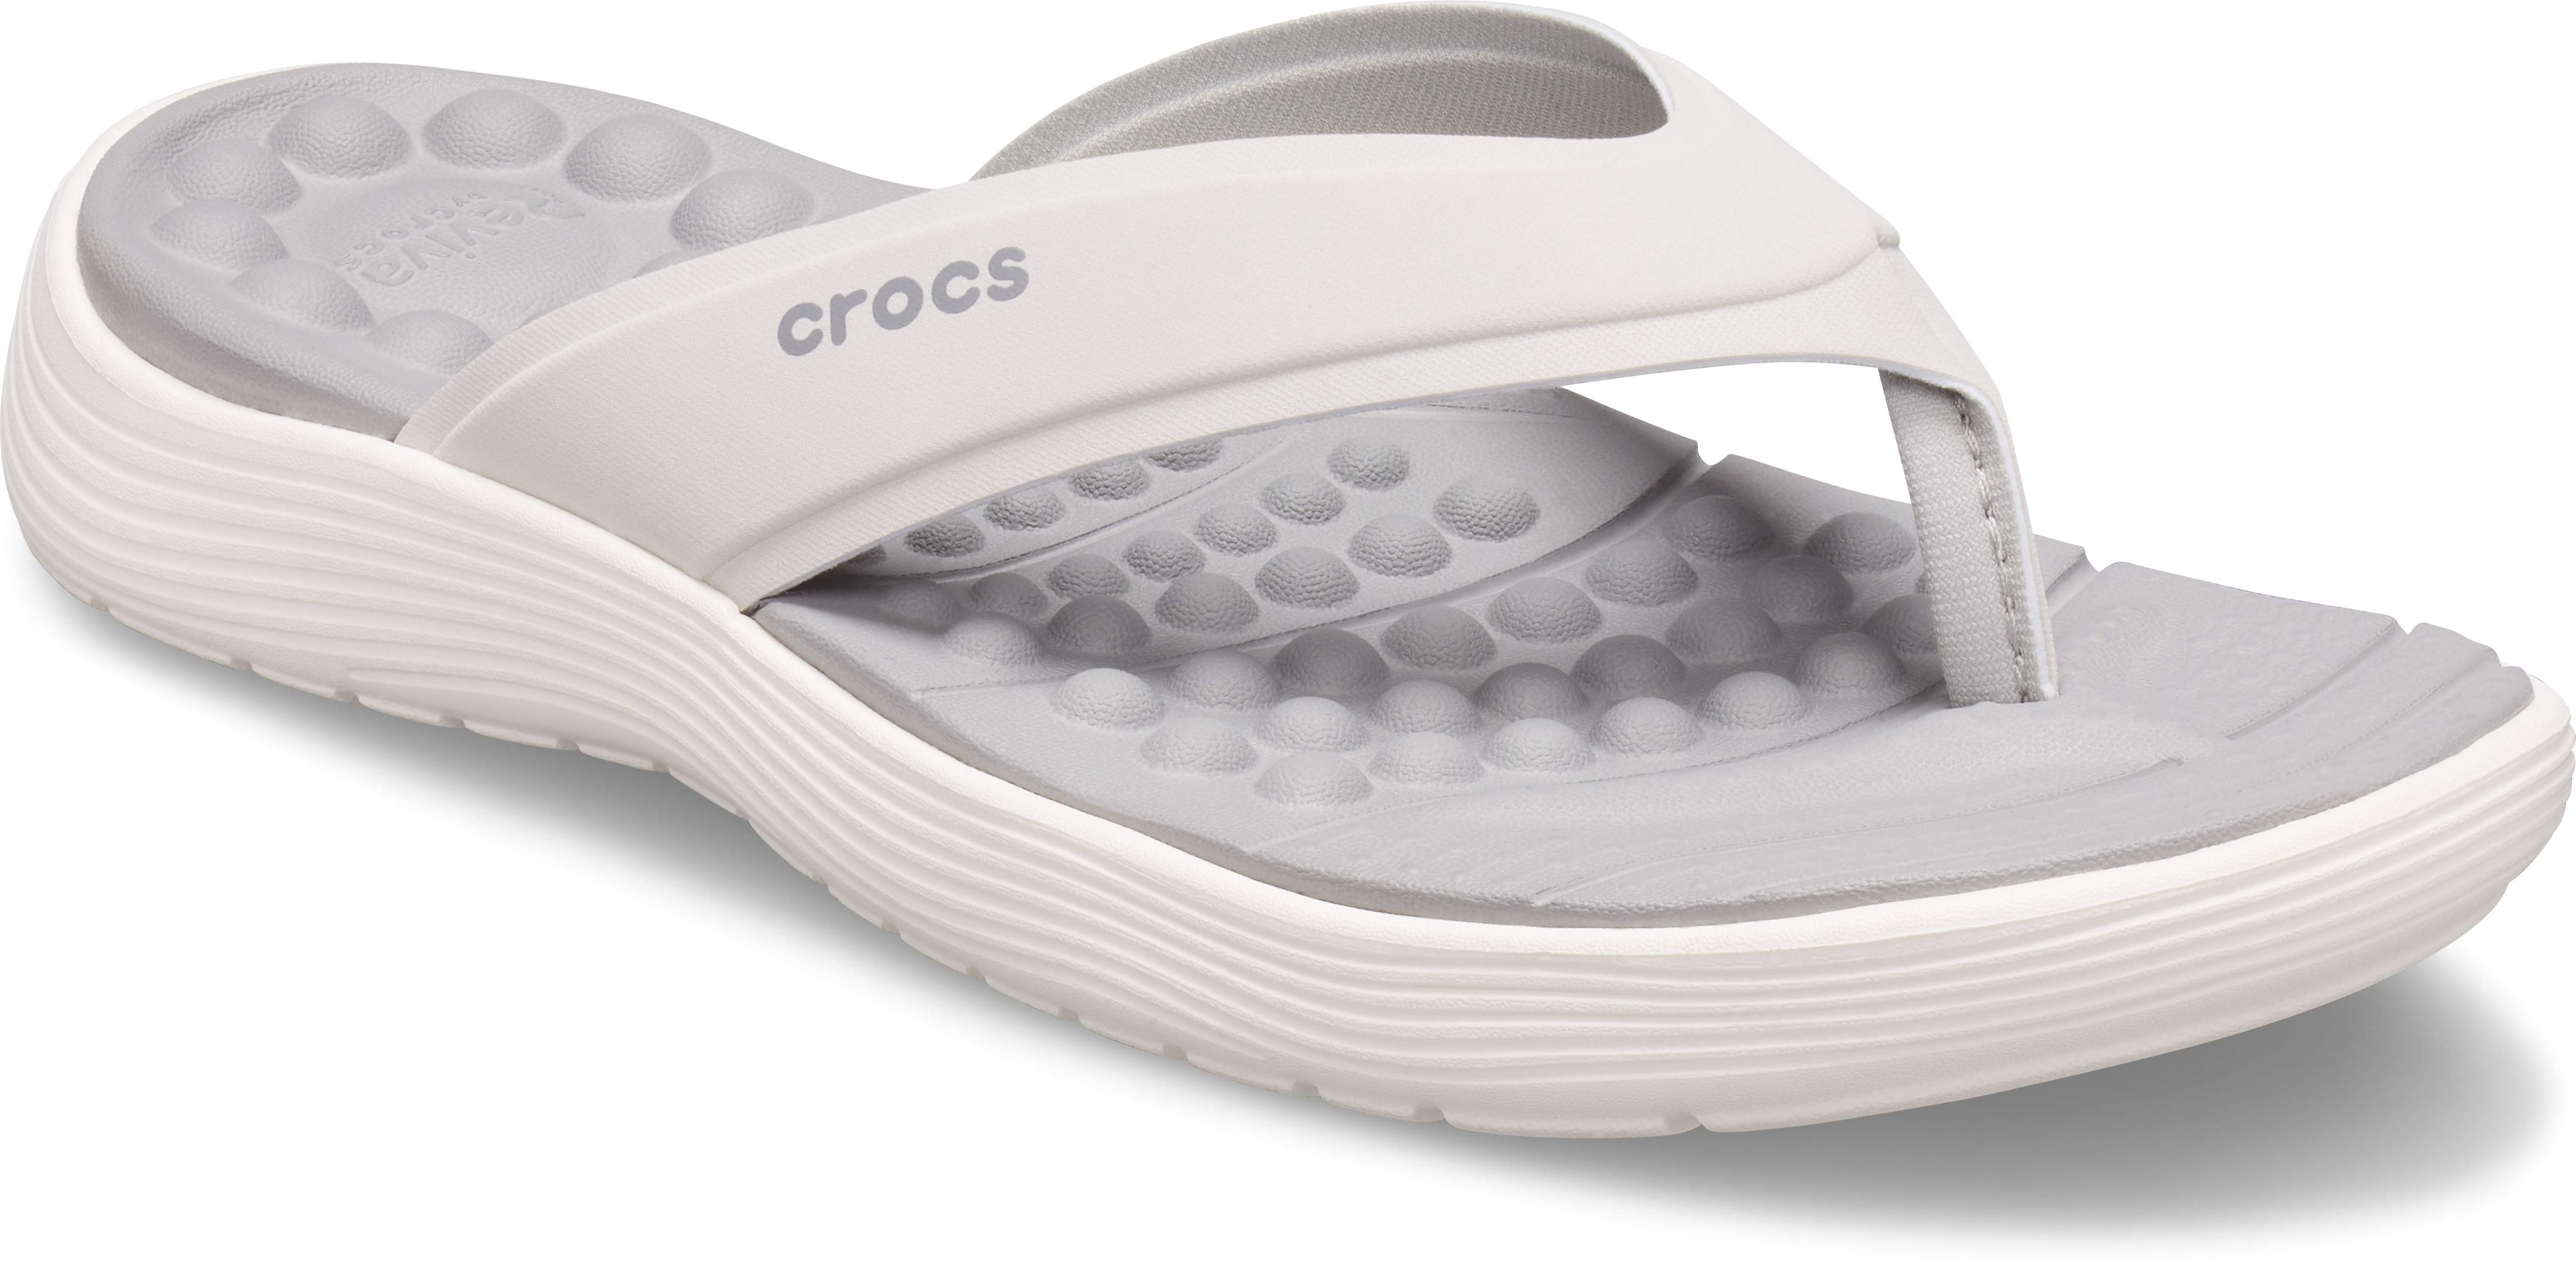 crocs reviva flip womens